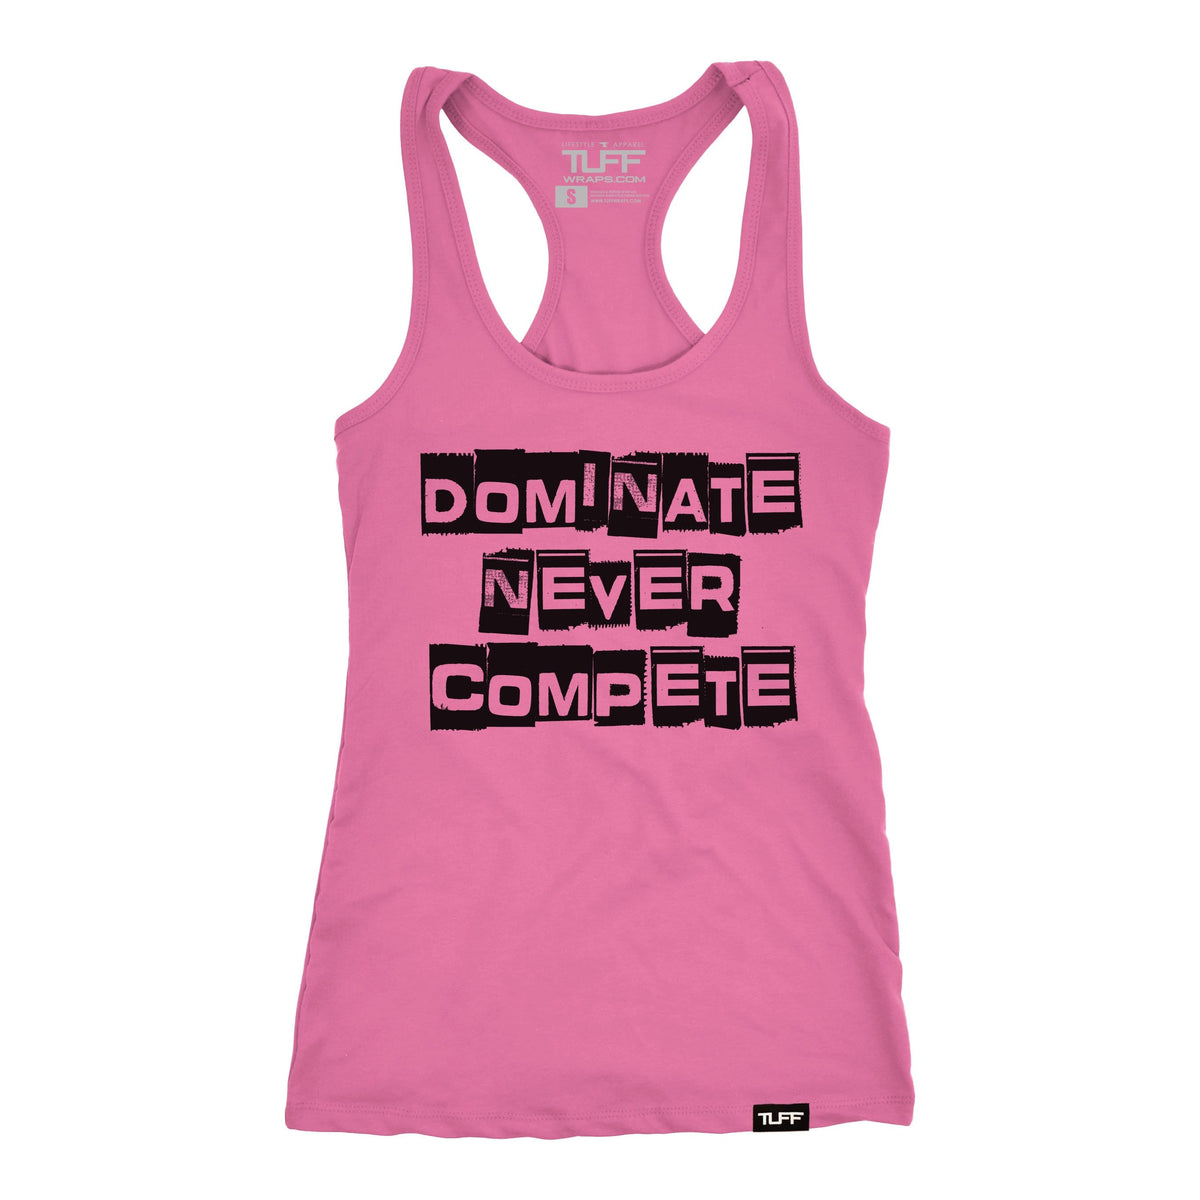 Dominate Never Compete Racerback Tank XS / Hot Pink TuffWraps.com